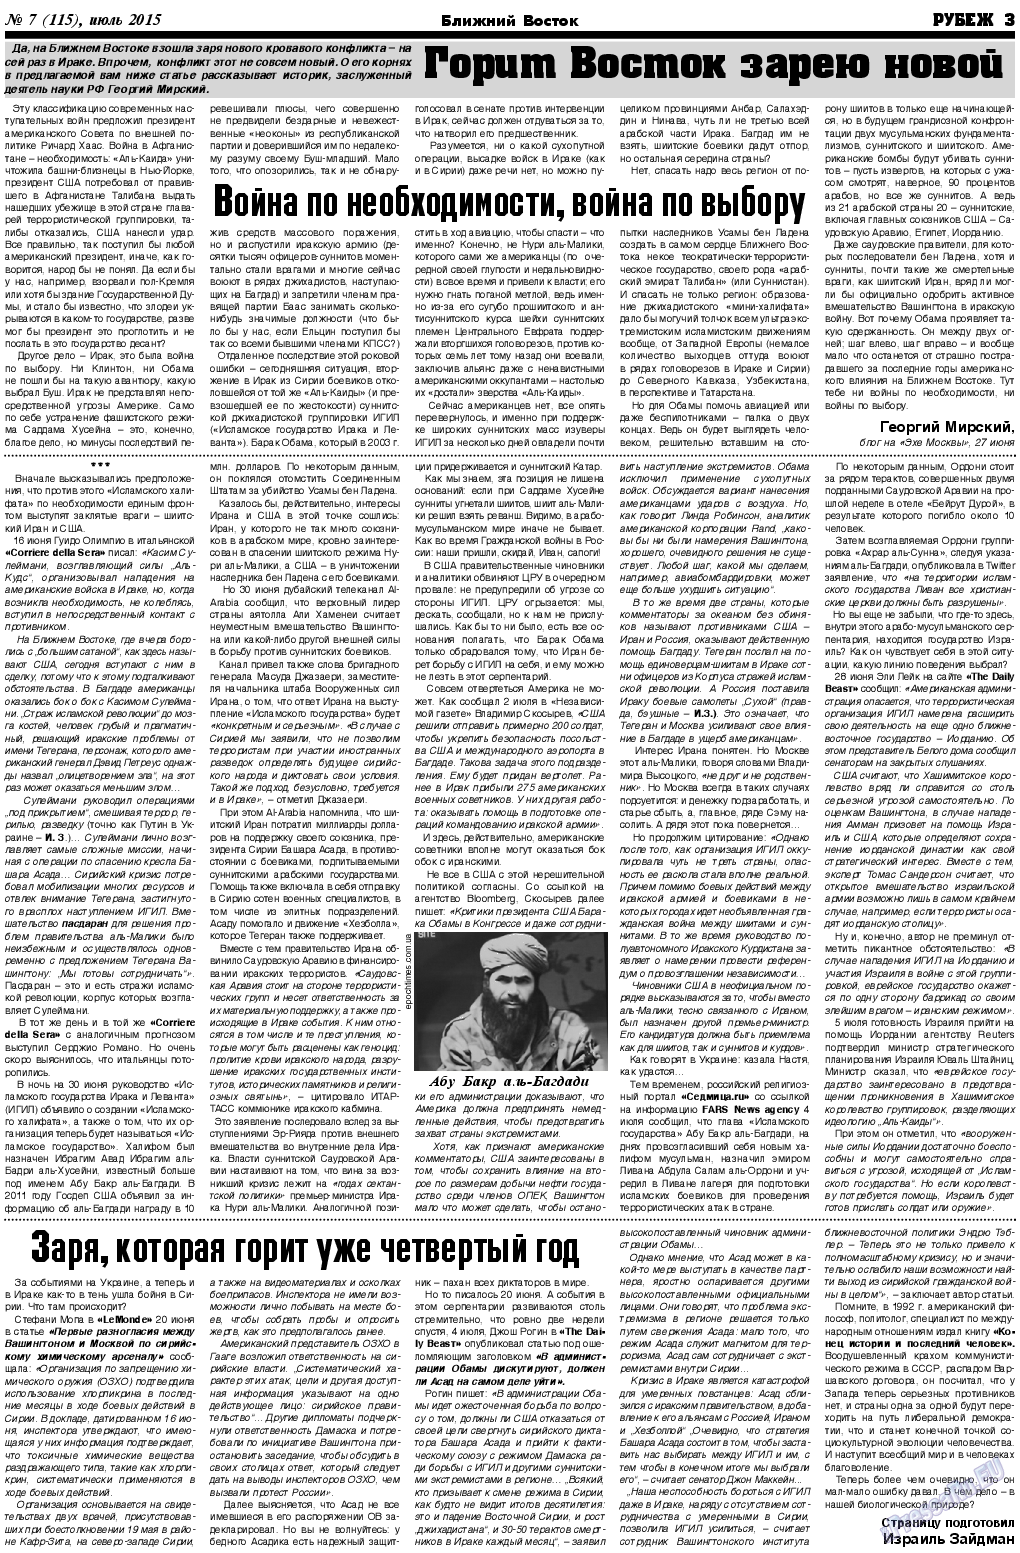 Рубеж, газета. 2014 №7 стр.3